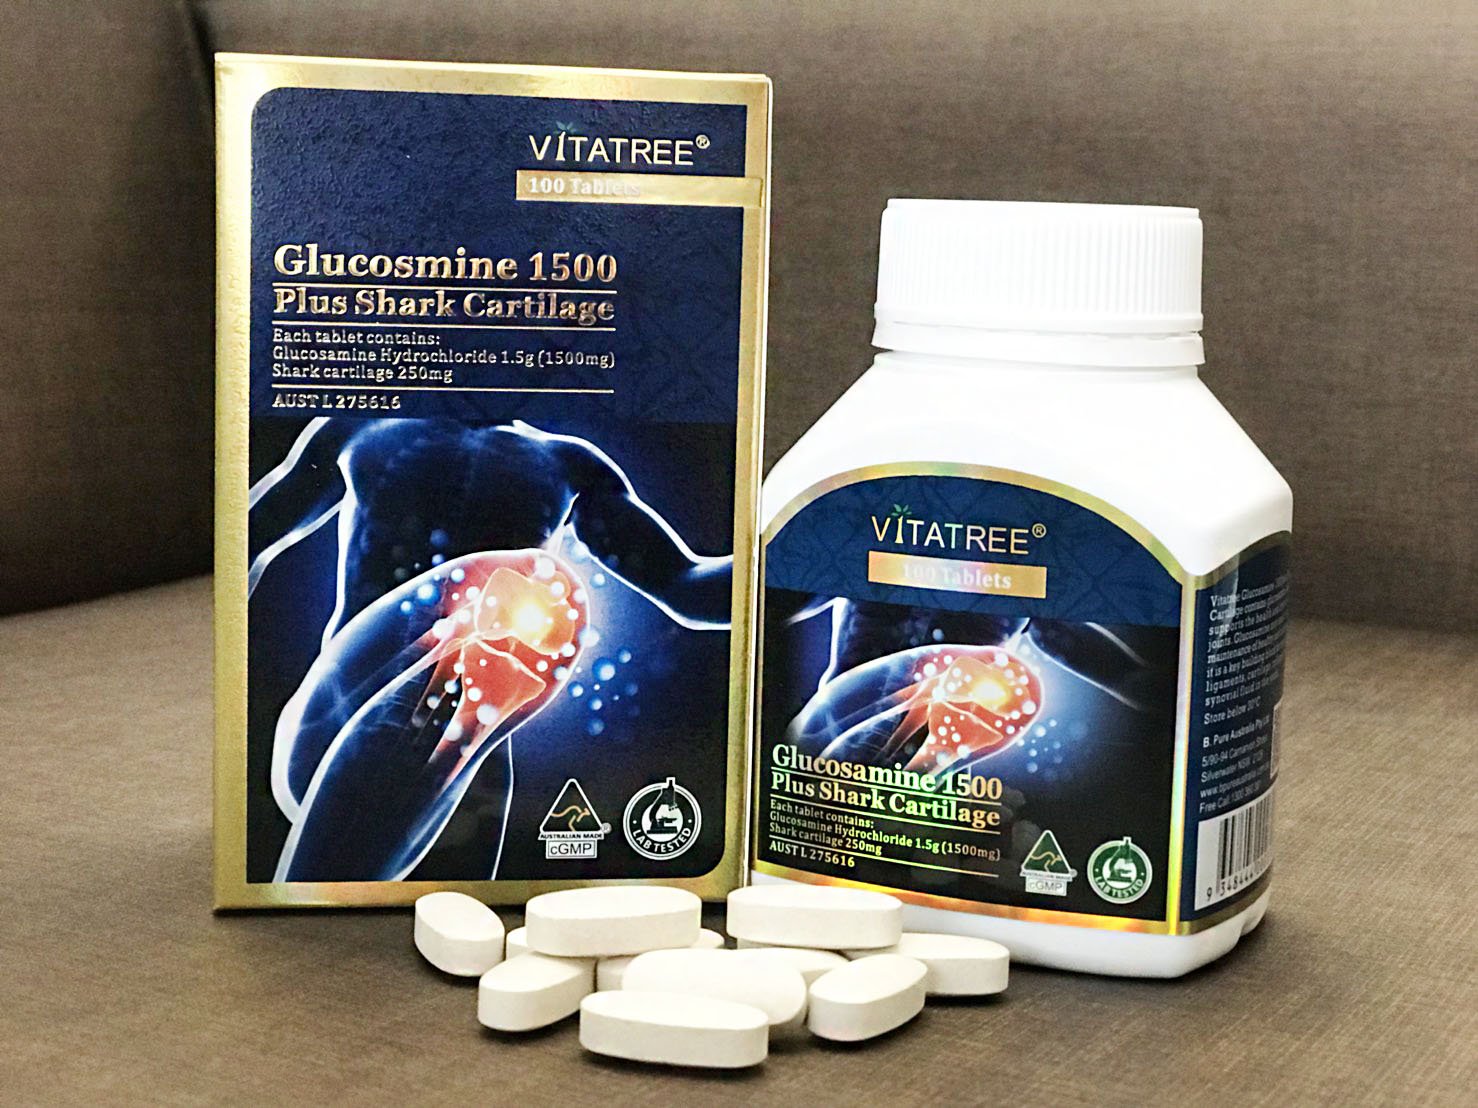 Vitatree glucosamine